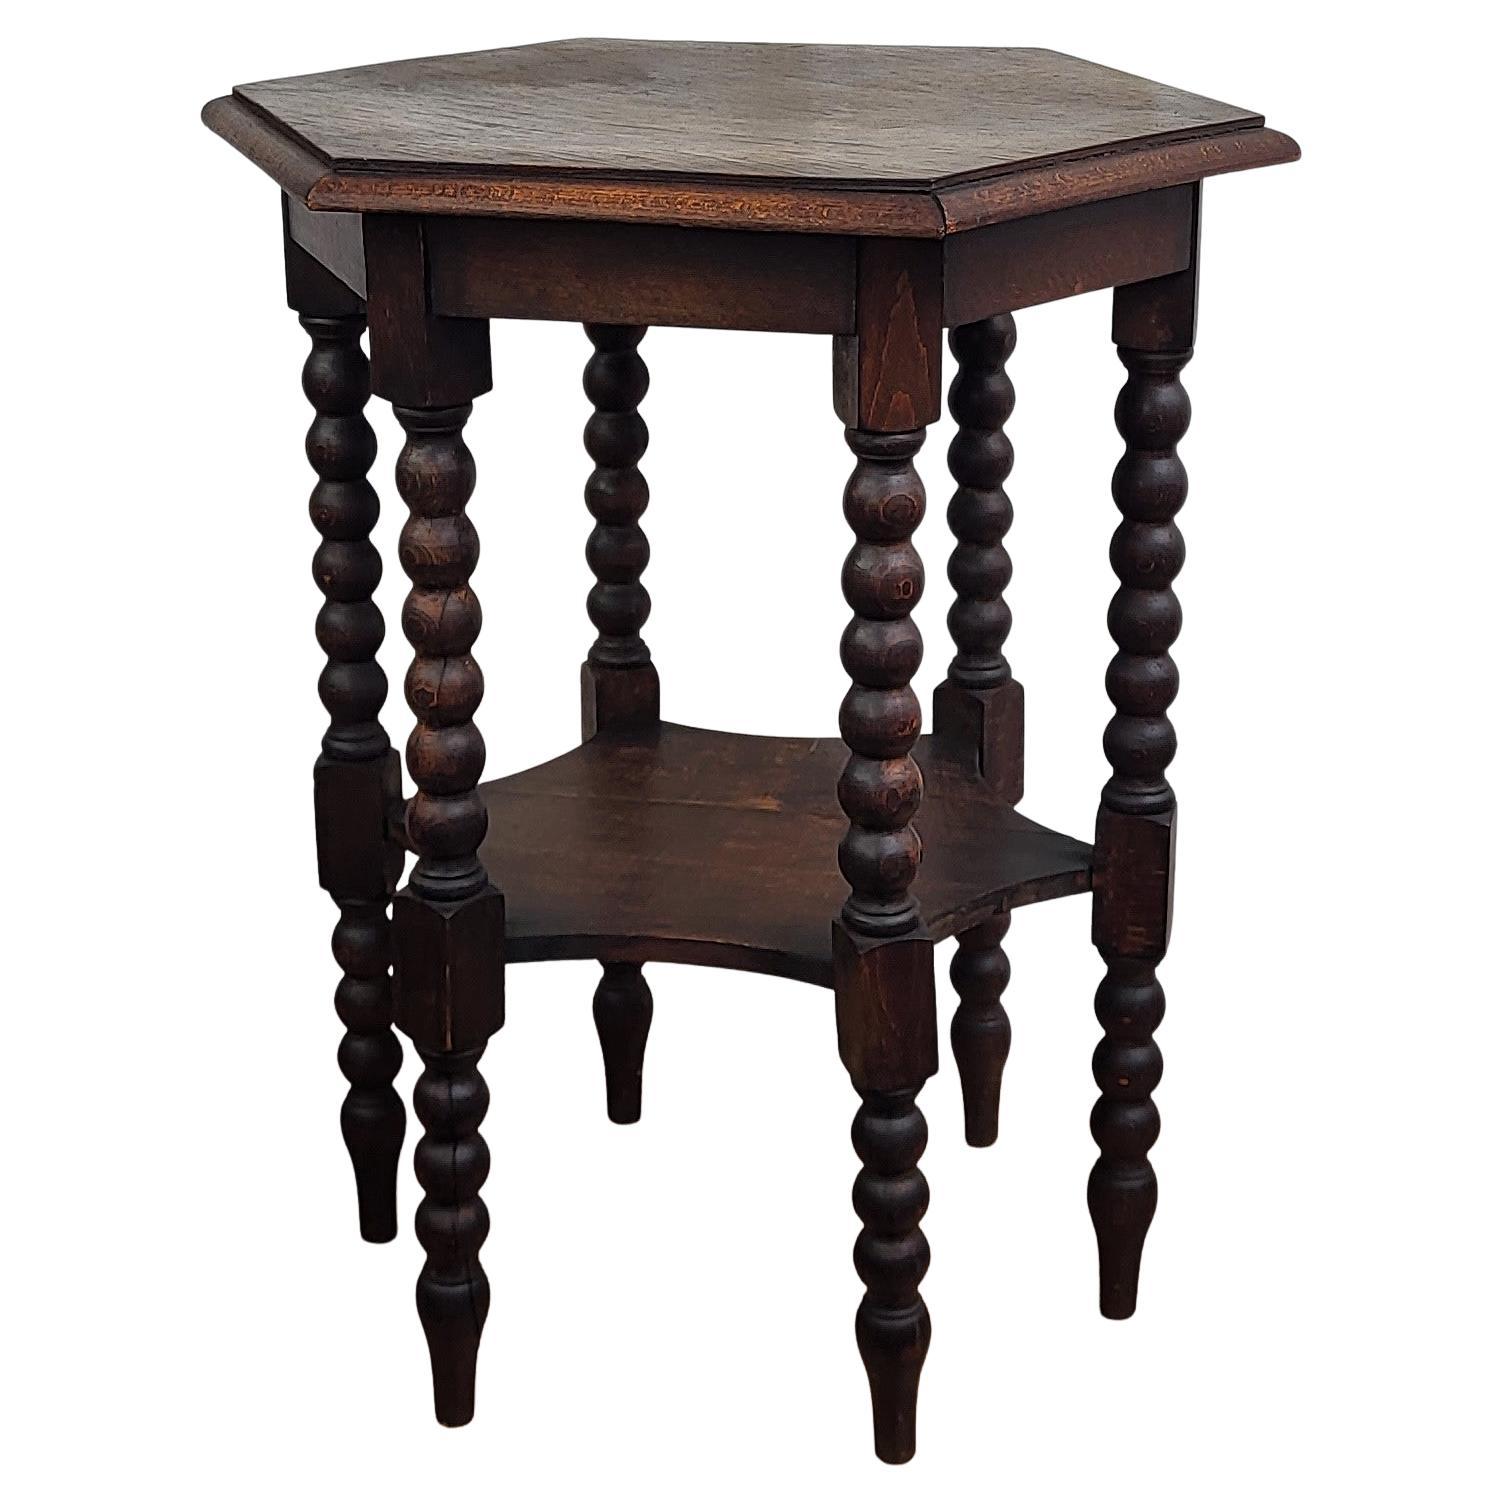 Antique Italian Hexagonal Walnut Side Table or Stool with Bobbin Turned Legs